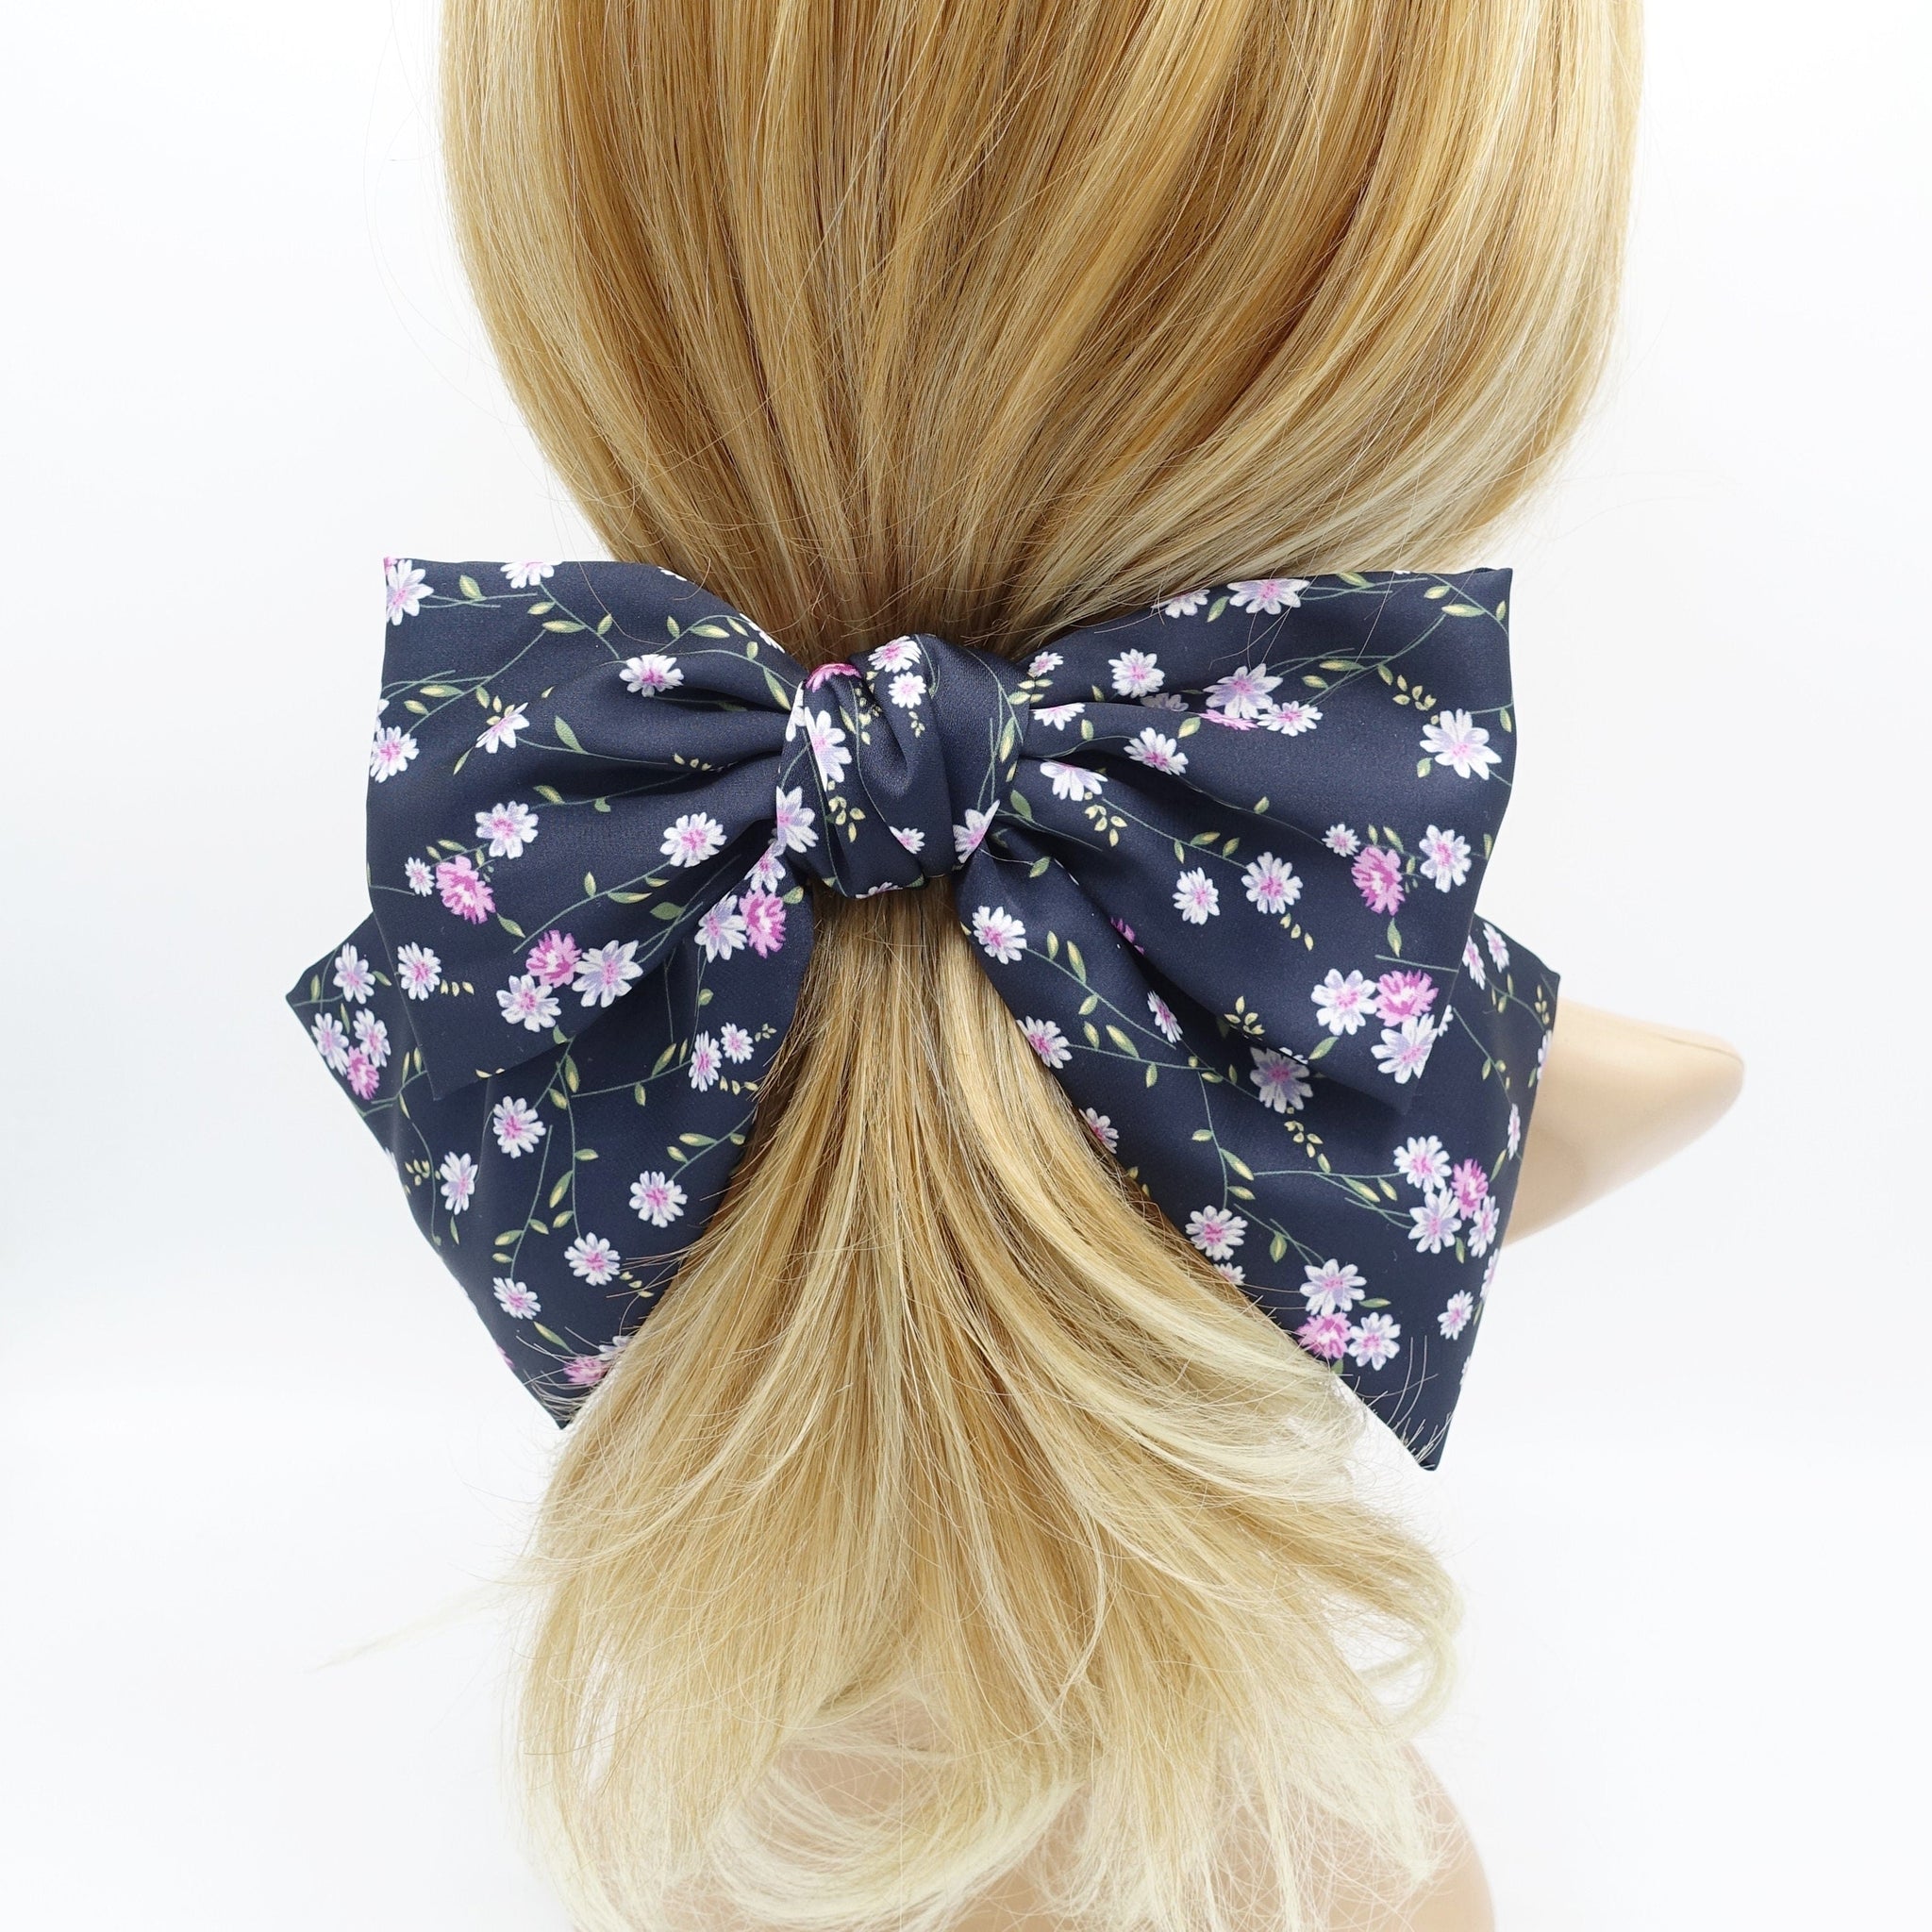 veryshine.com Barrette (Bow) Navy silk satin hair bow floral print big hair accessory for women